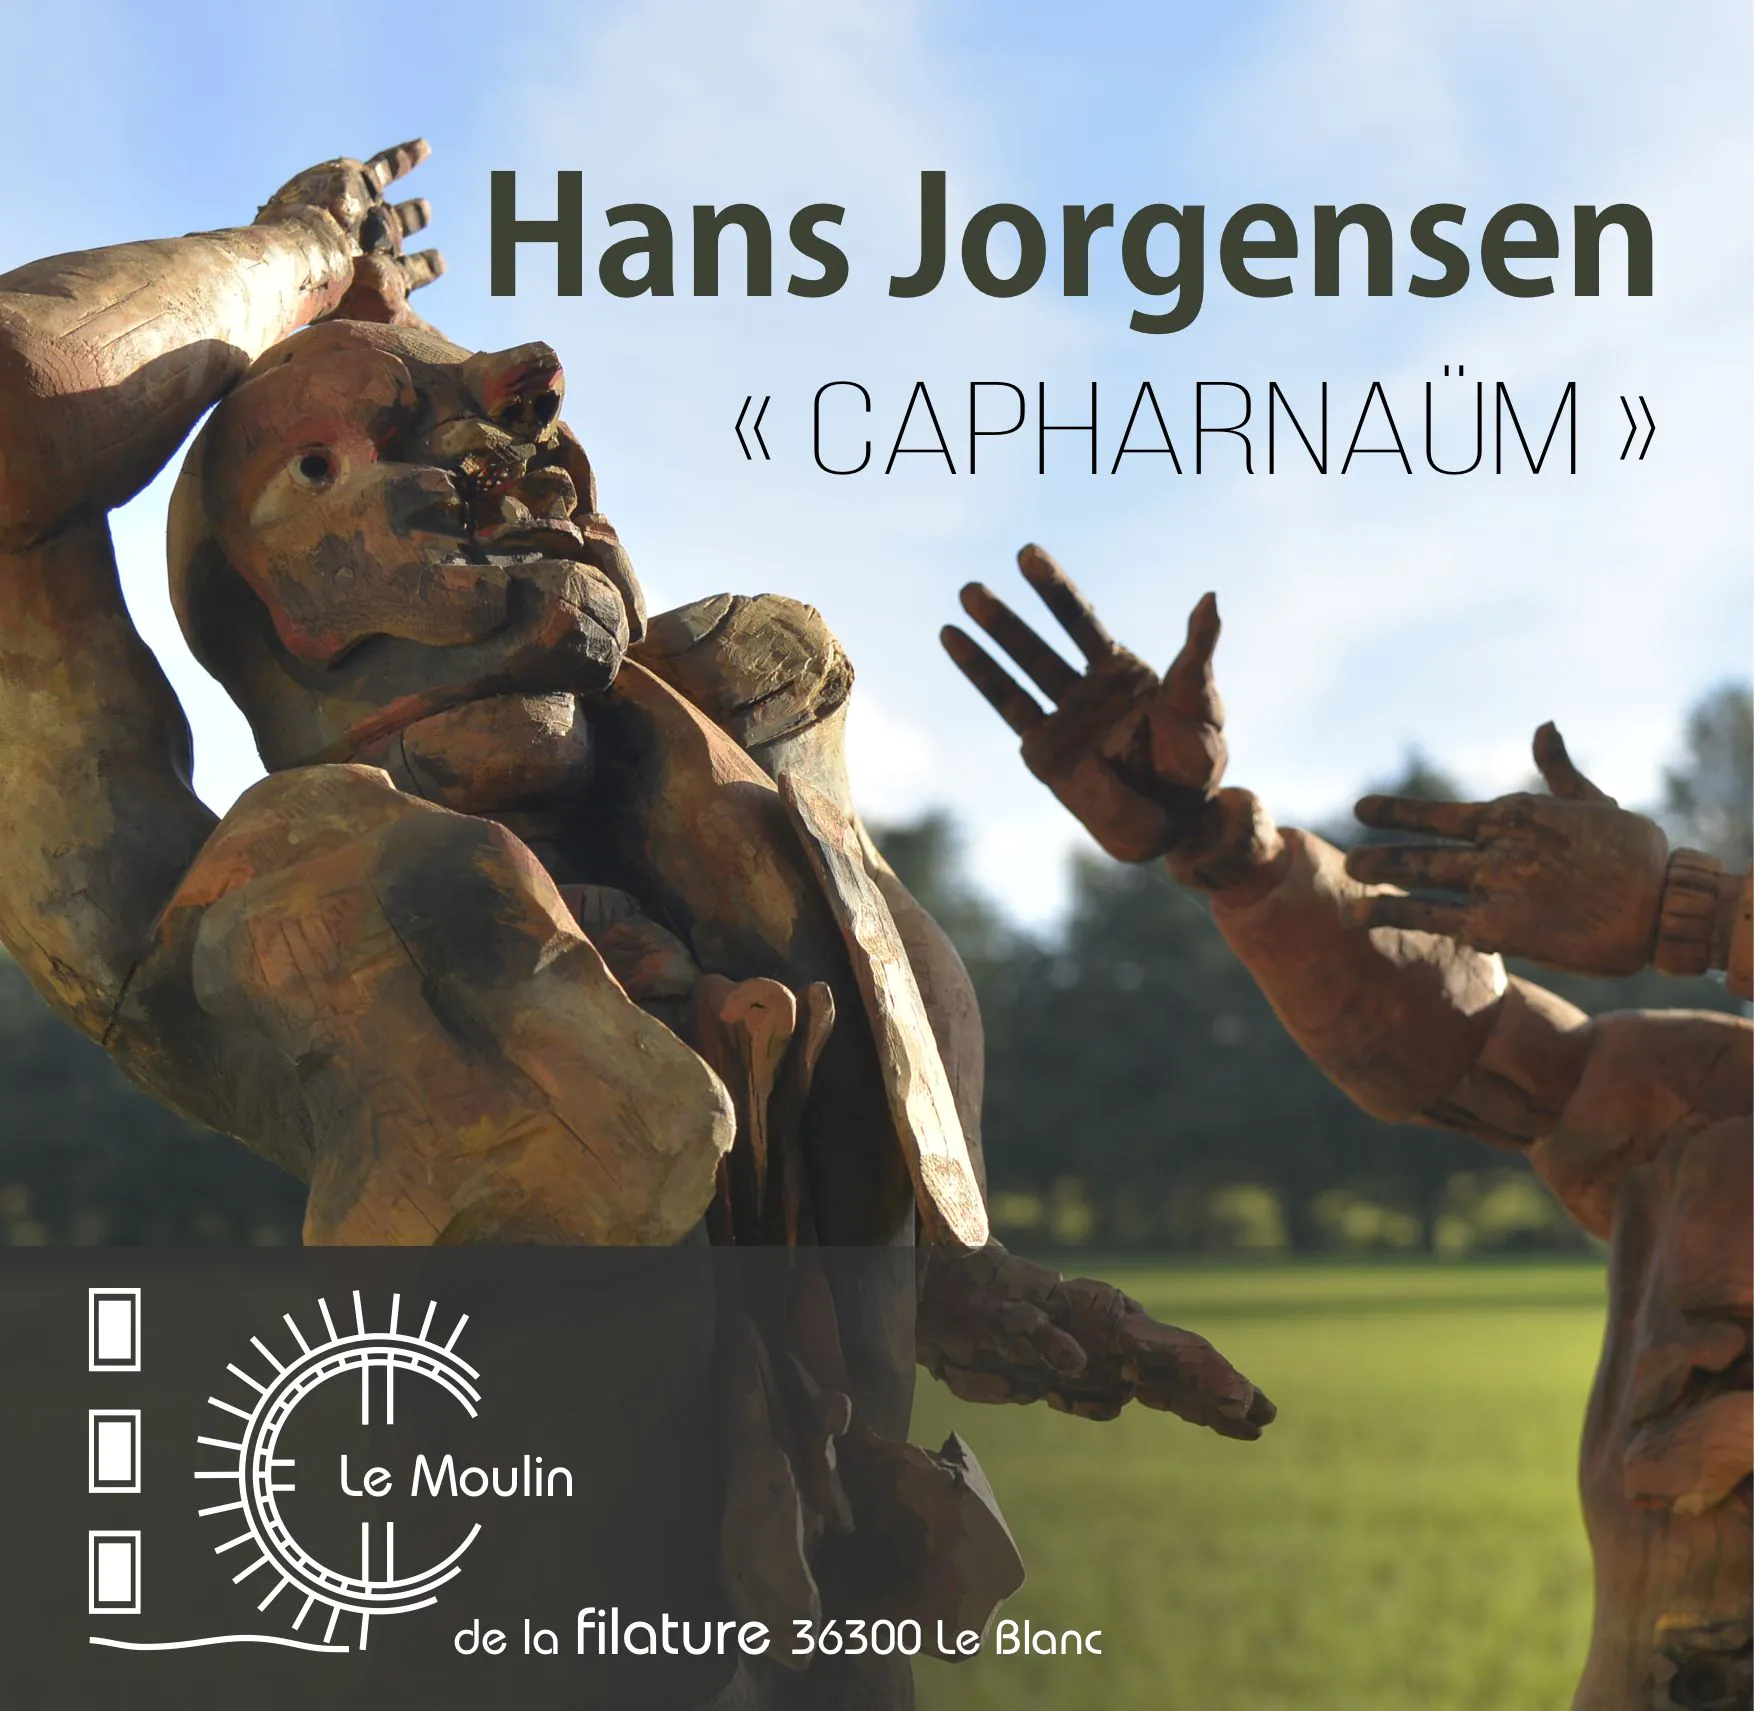 Exposition "Capharnaüm" par Hans Jorgensen